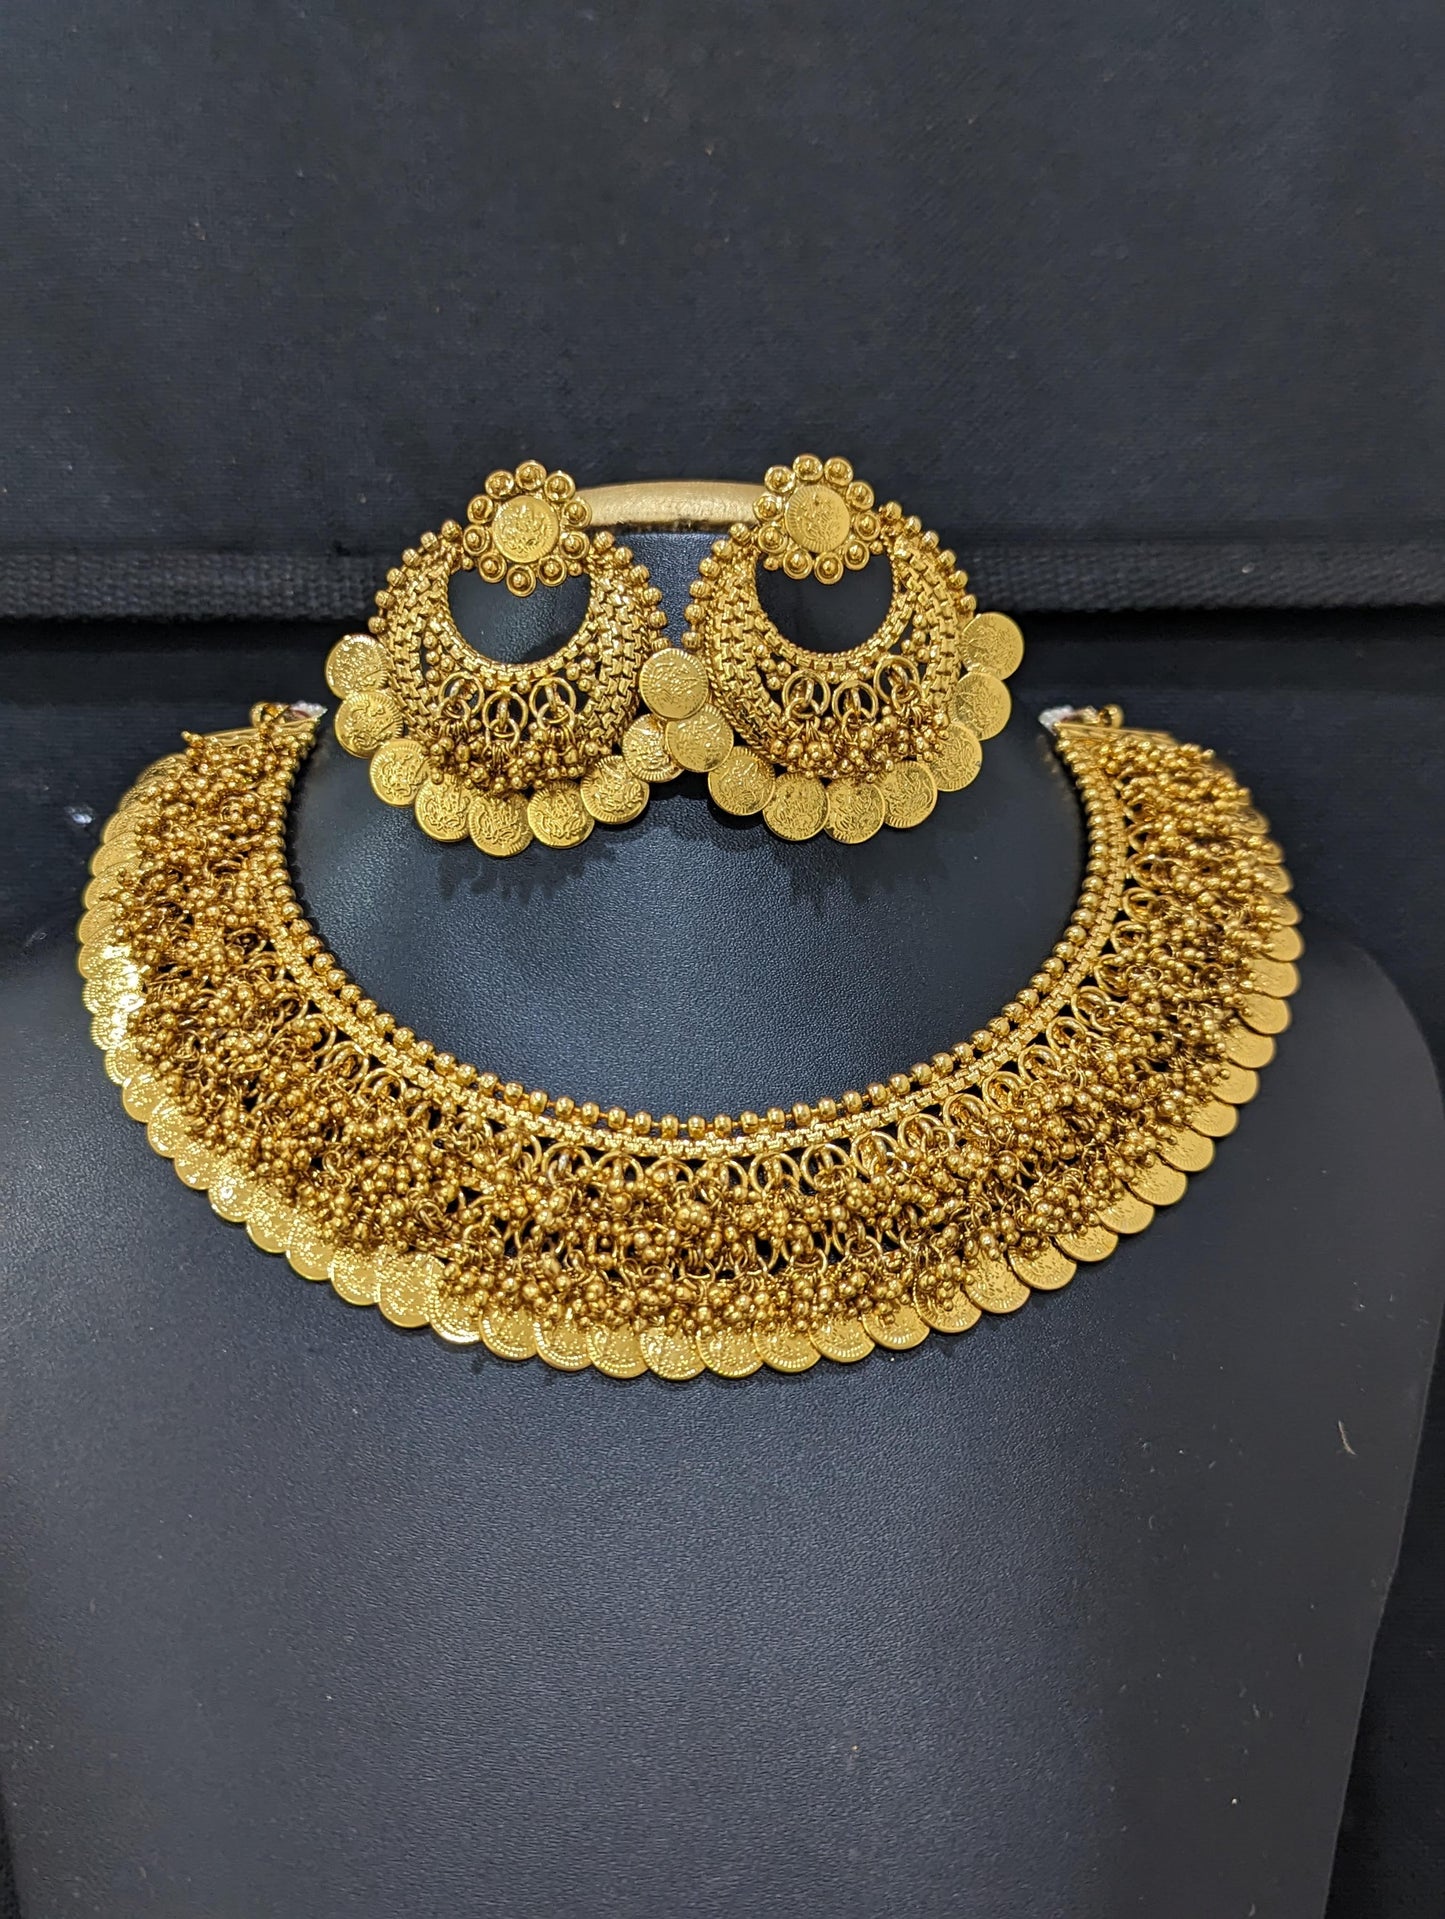 Goddess Lakshmi Broad Choker Necklace and Earrings set